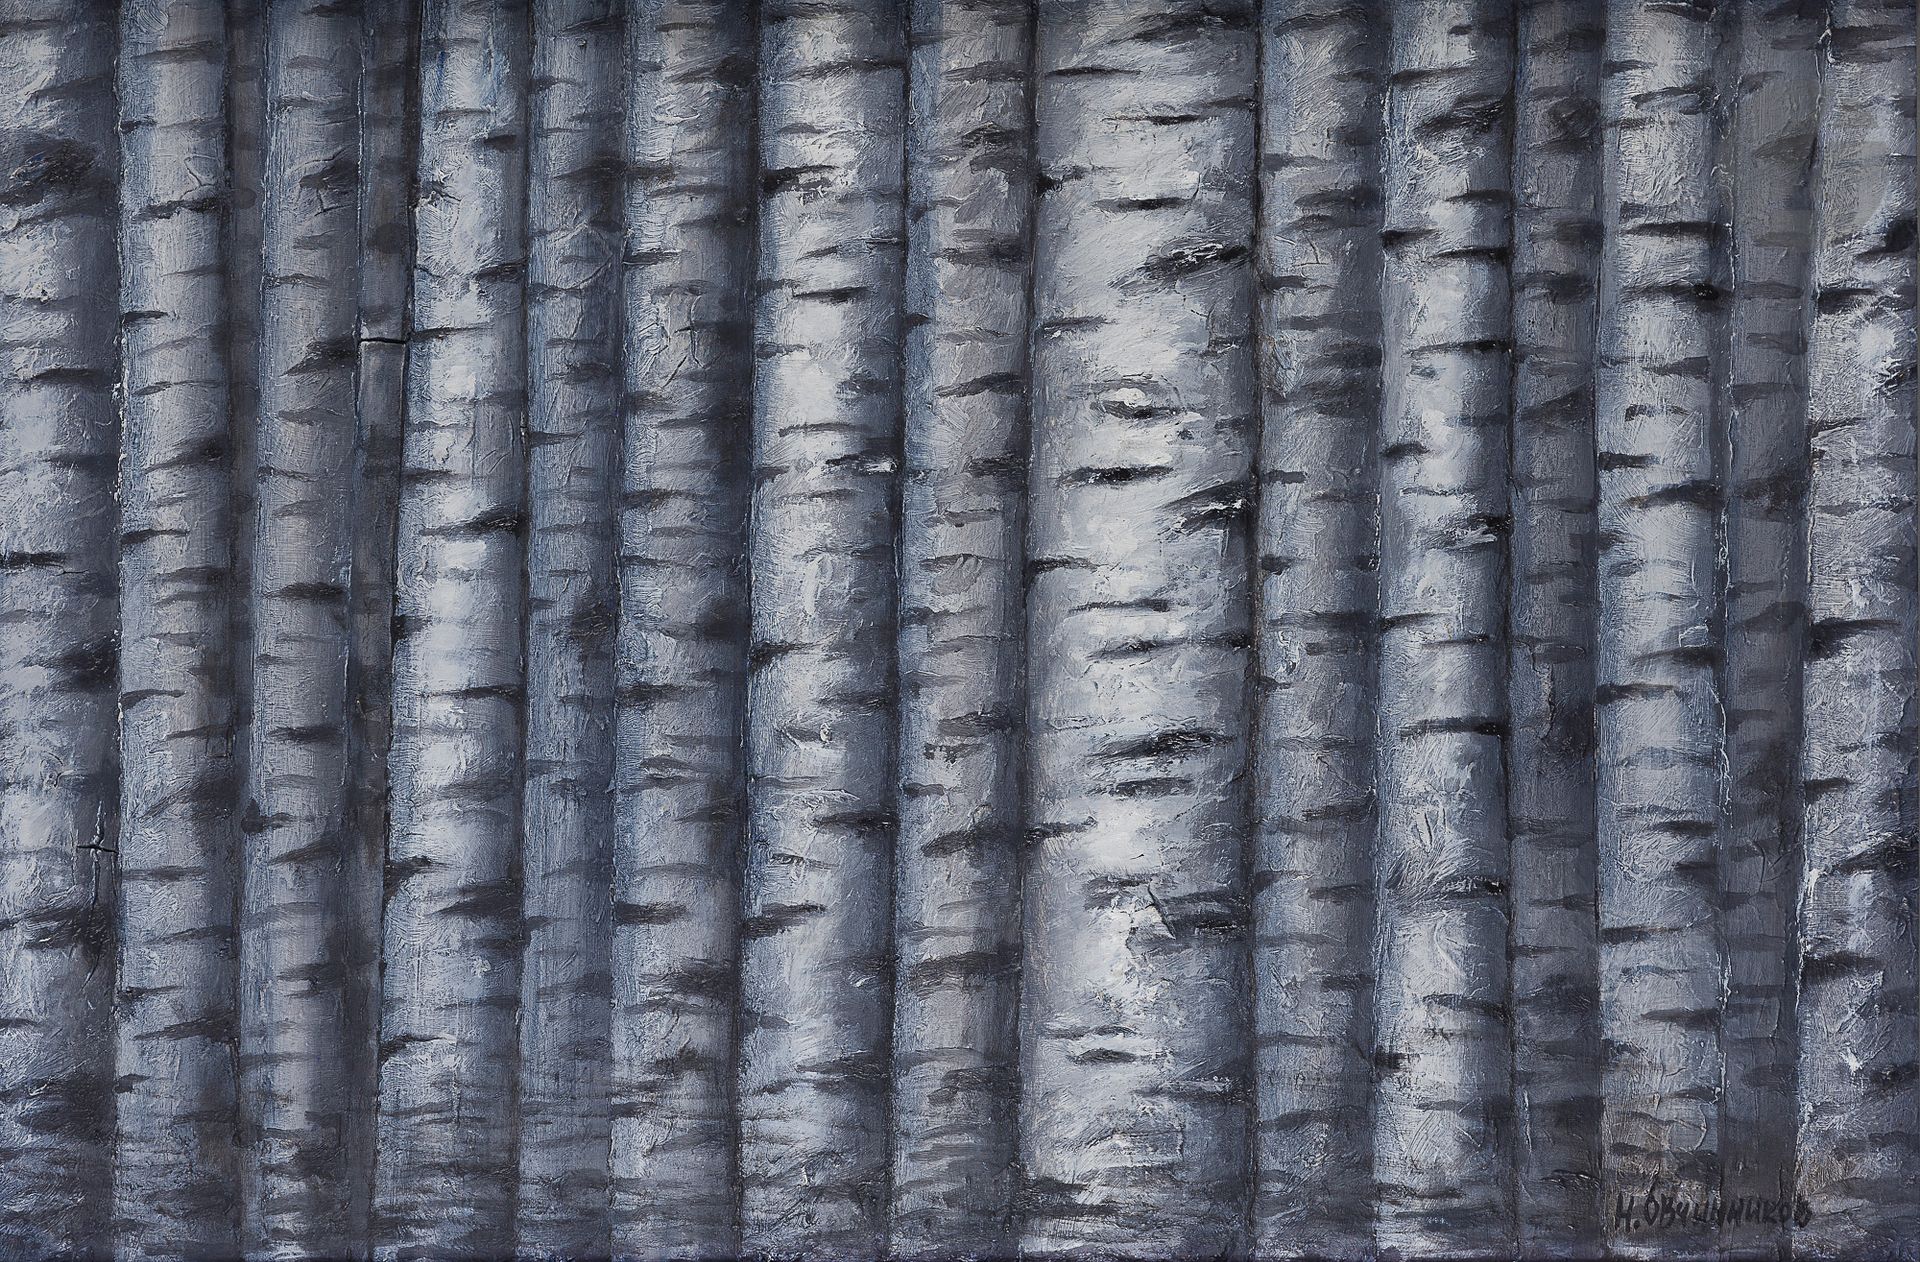 Null 尼古拉-尼古拉耶维奇-奥夫钦尼科夫
（生于1958年）
《白桦树》
布面油画。

54.5 x 90 cmНиколай

Николаевич ОВ&hellip;